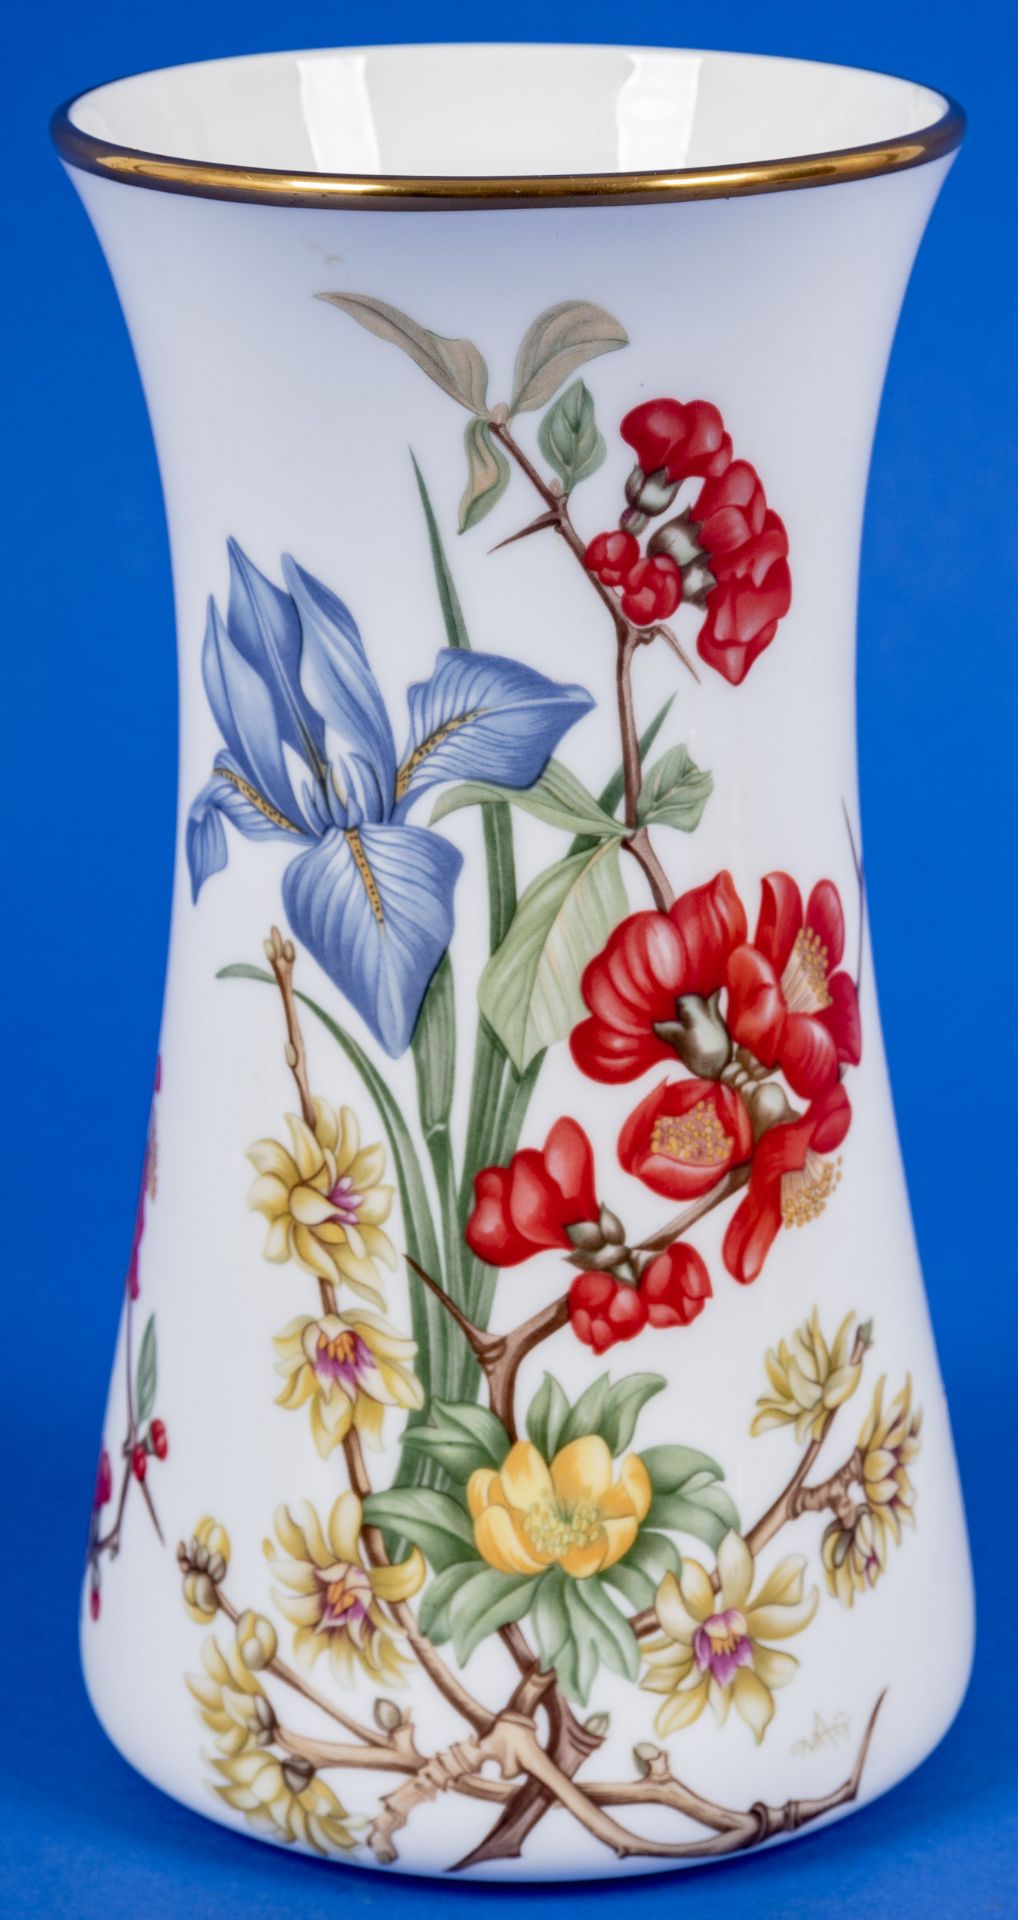 Keulenförmige Blumenvase, Wedgewood, Bone-China, Höhe ca. 22 cm, polychrom lithografierte Floraldek